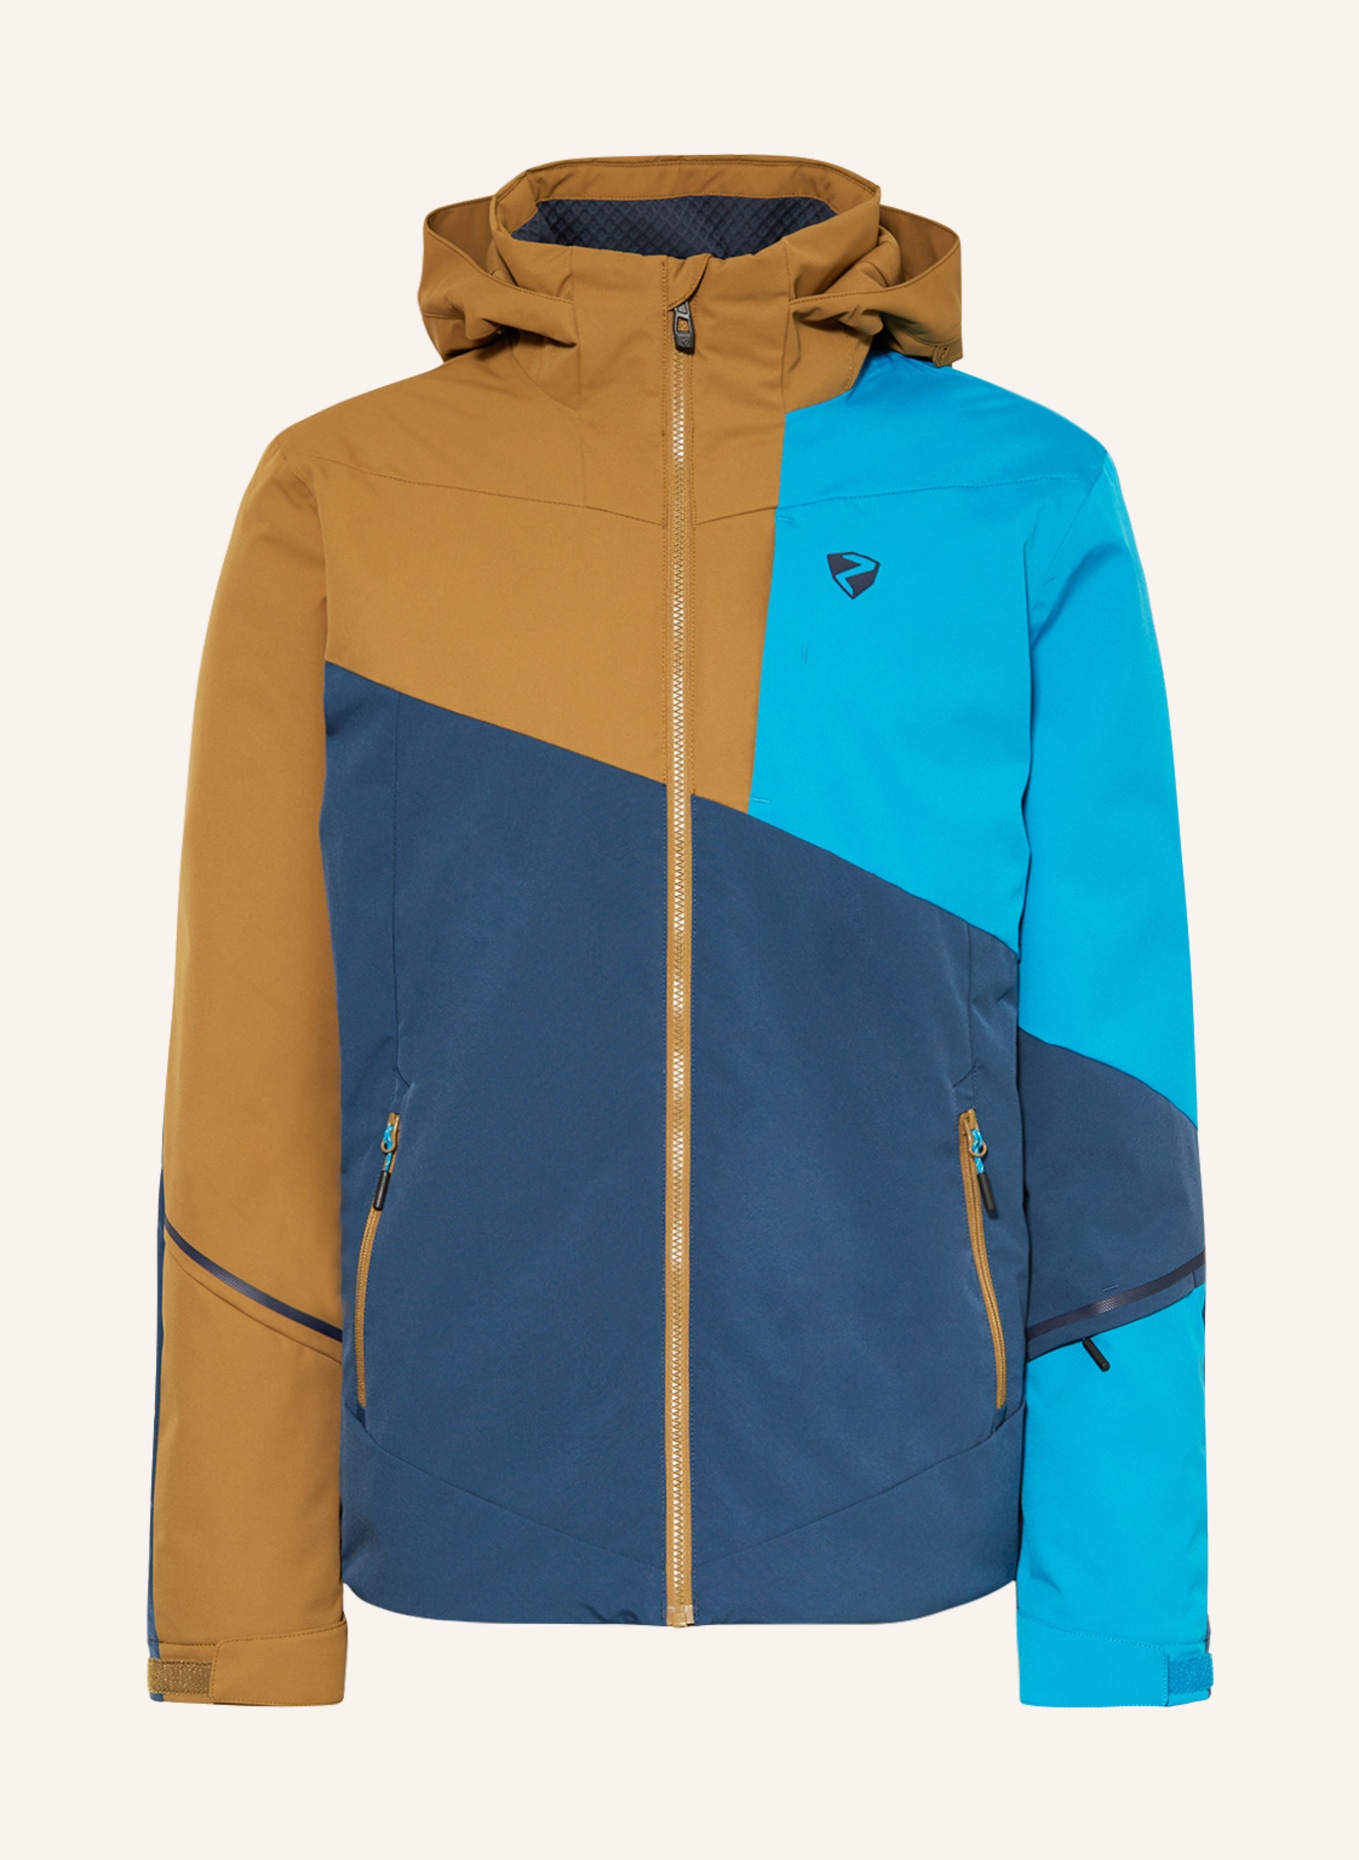 ziener Ski jacket TIMPA in dark olive/ turquoise/ blue